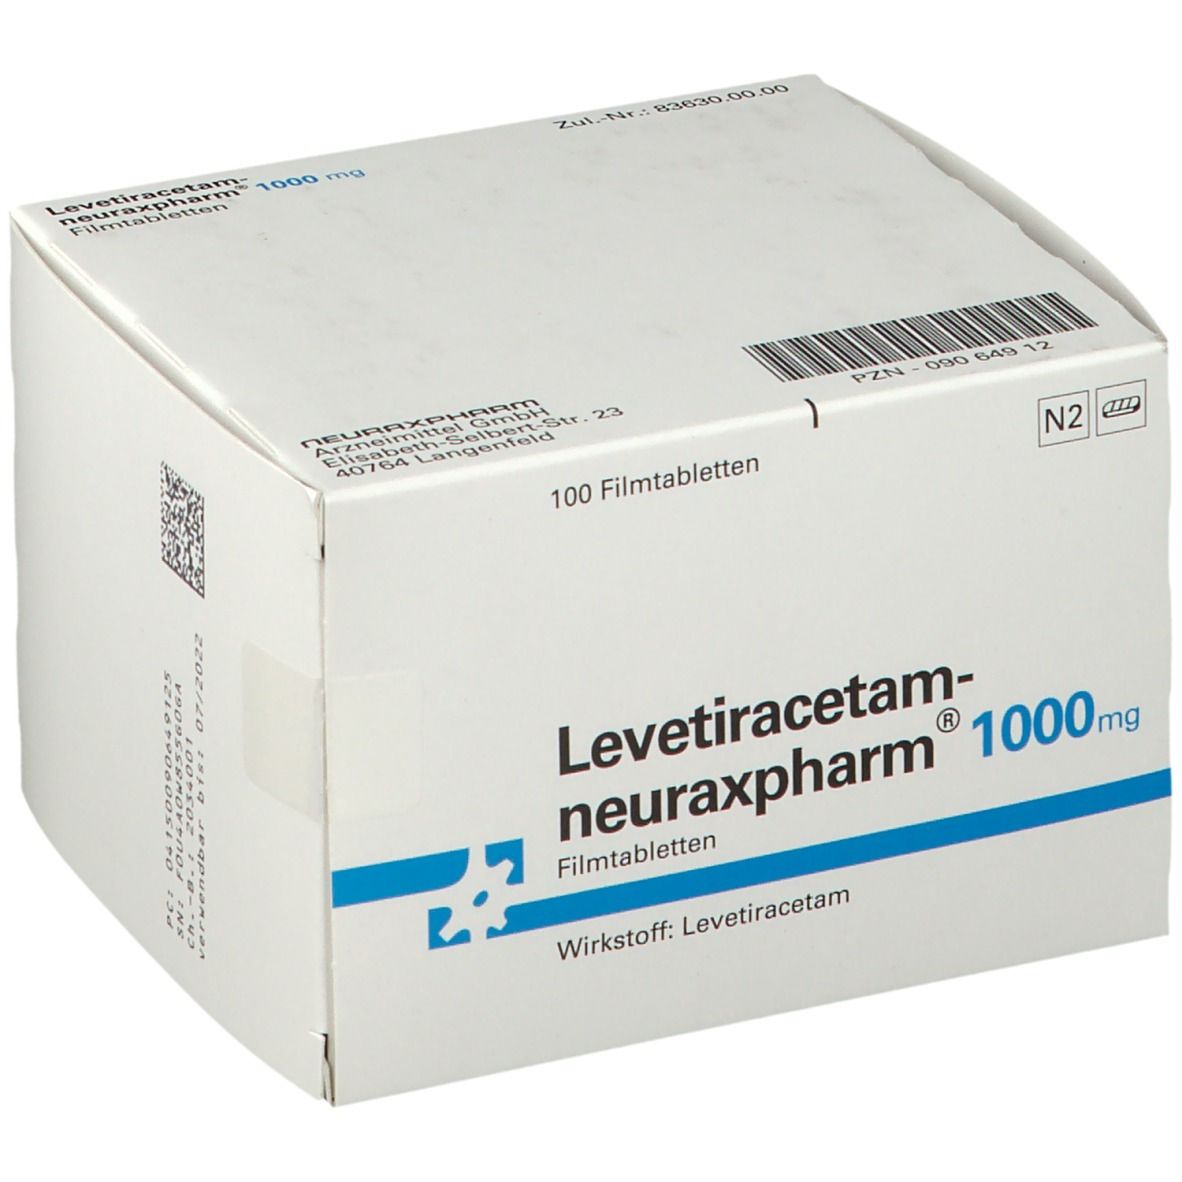 Levetiracetam-neuraxpharm® 1000 mg